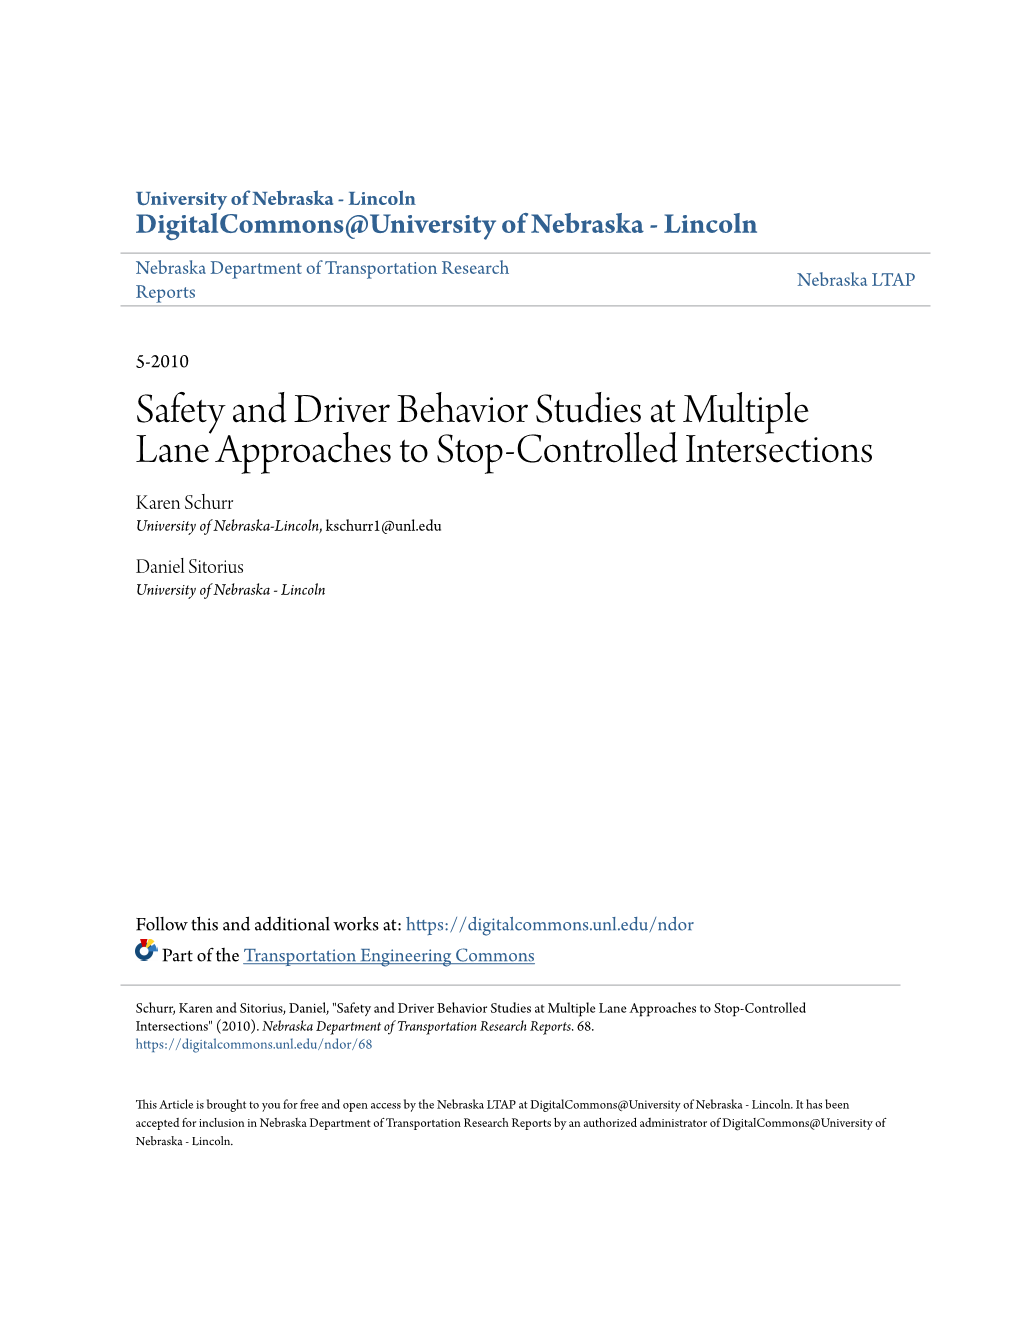 Safety and Driver Behavior Studies at Multiple Lane Approaches to Stop-Controlled Intersections Karen Schurr University of Nebraska-Lincoln, Kschurr1@Unl.Edu